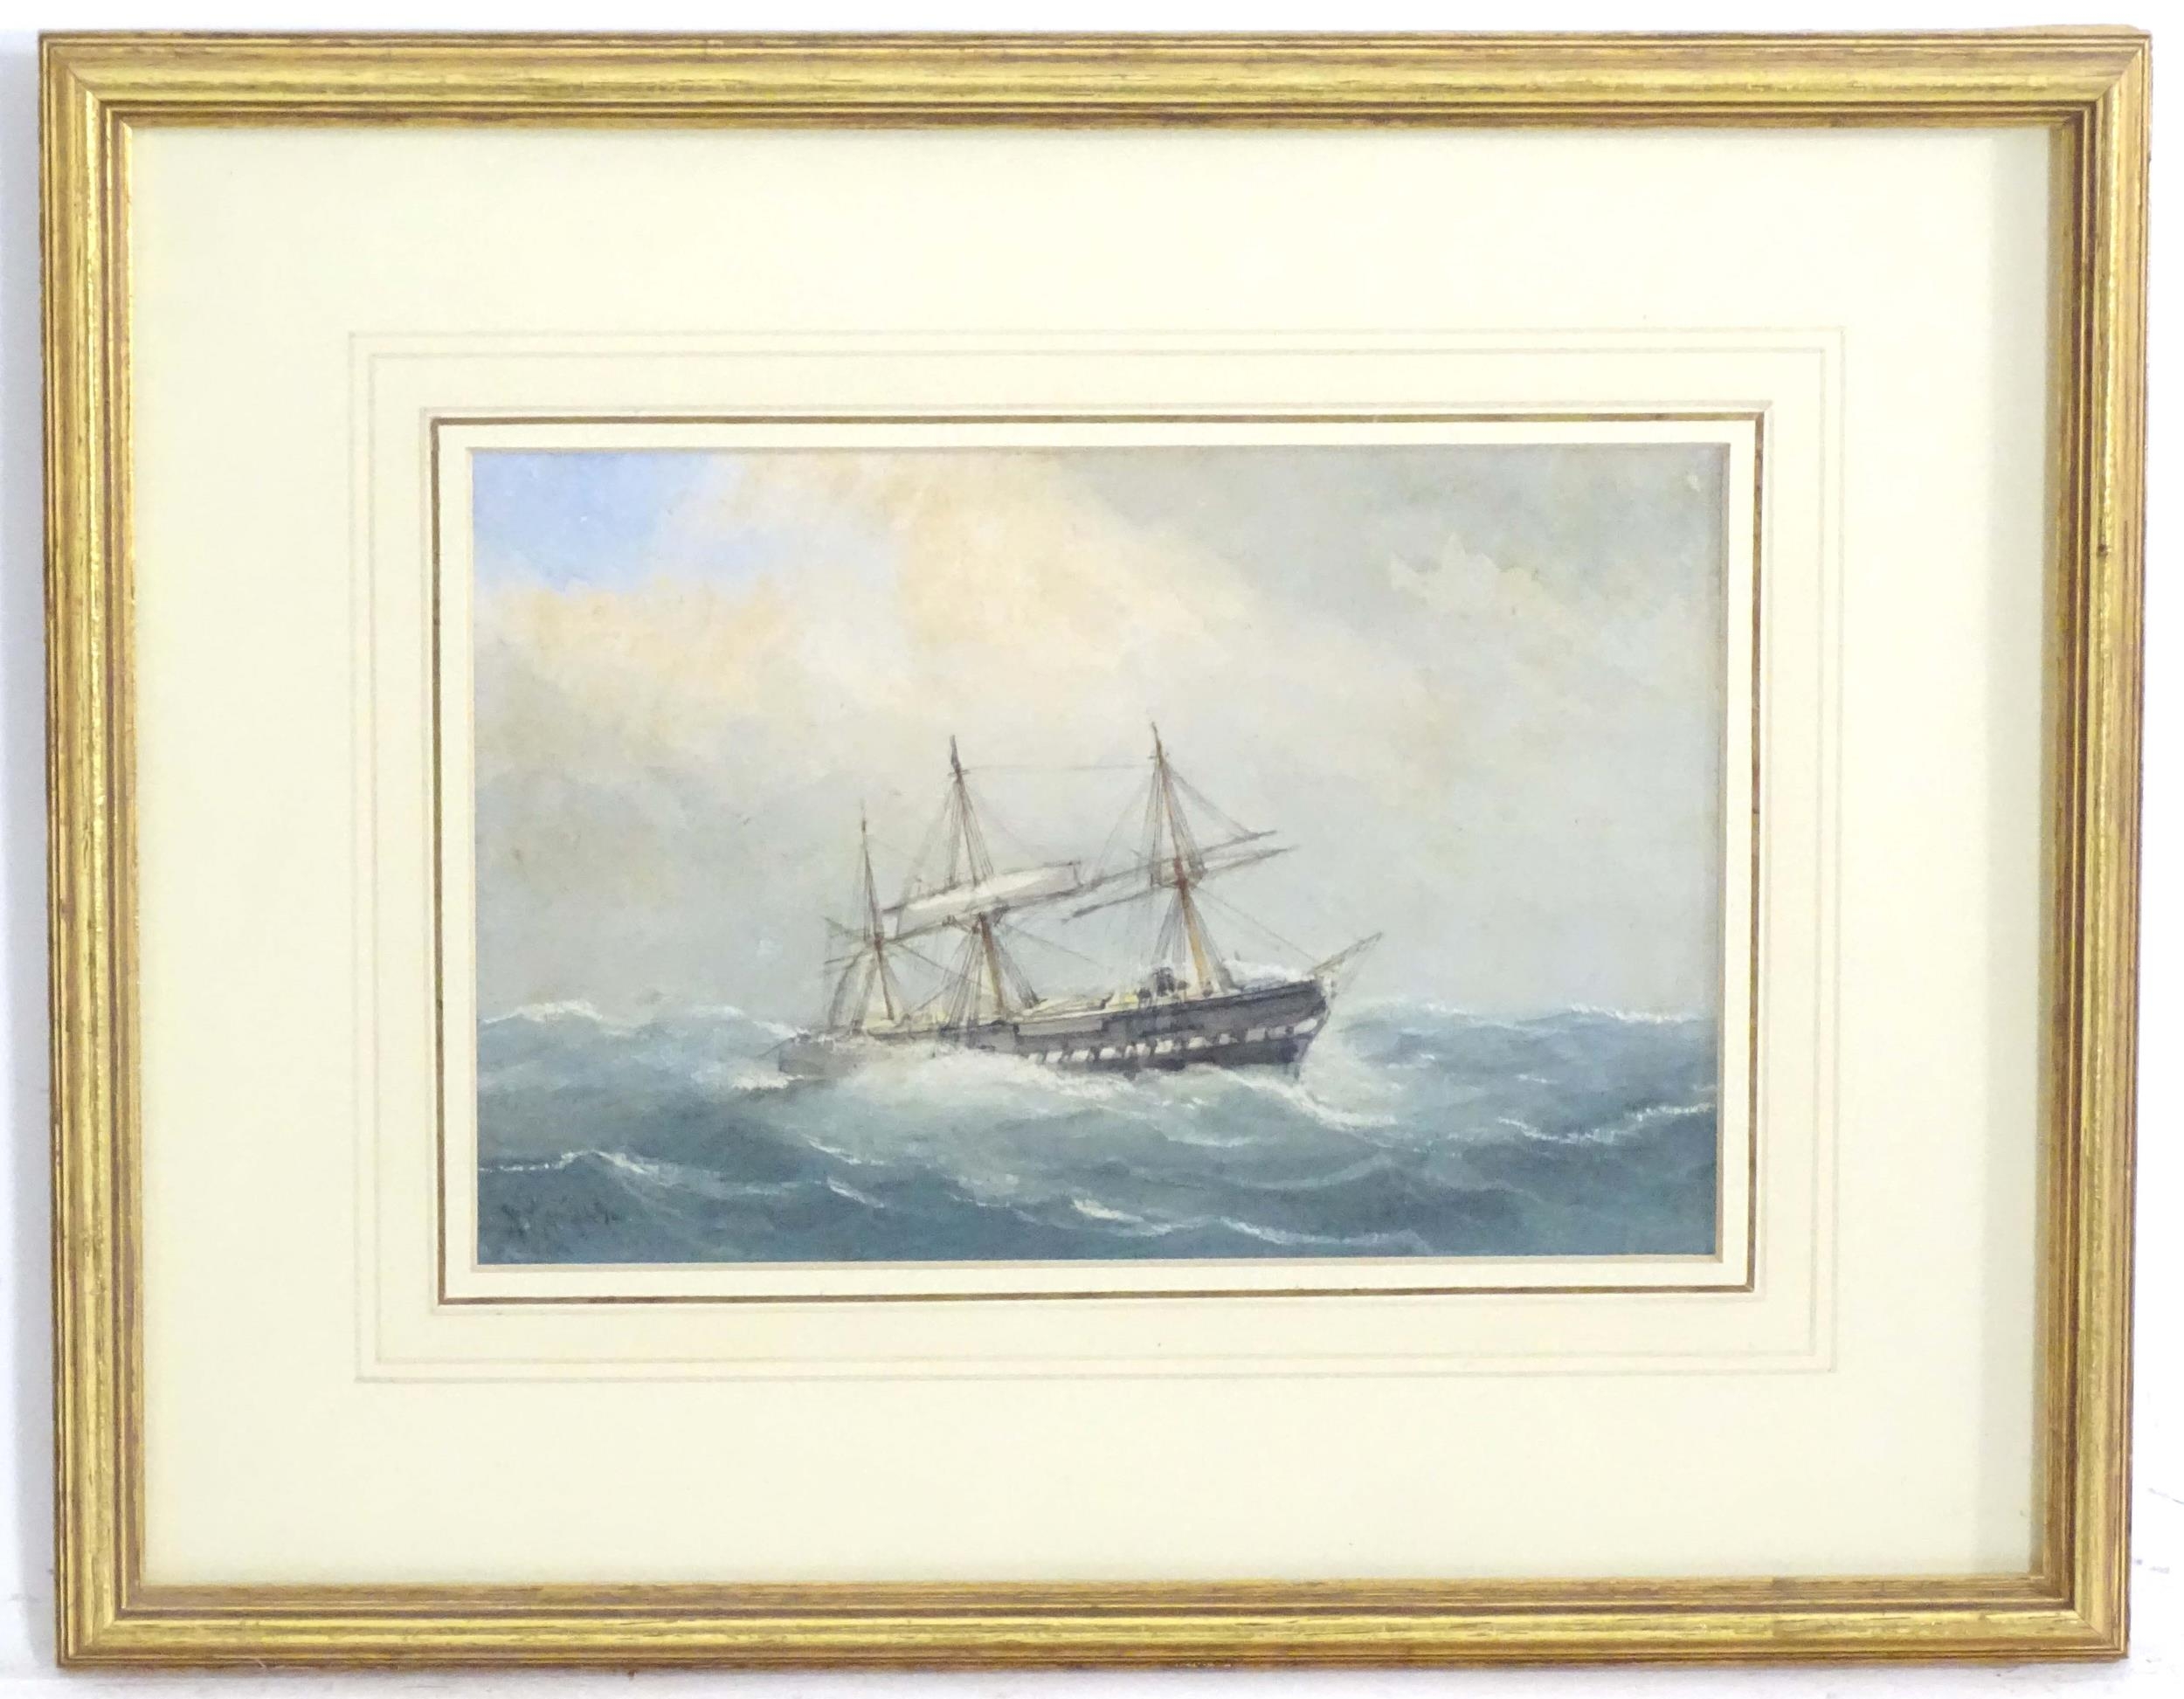 Richmond Markes, 19th century, Marine School, Watercolour, Shipping at Sea, A clipper ship in